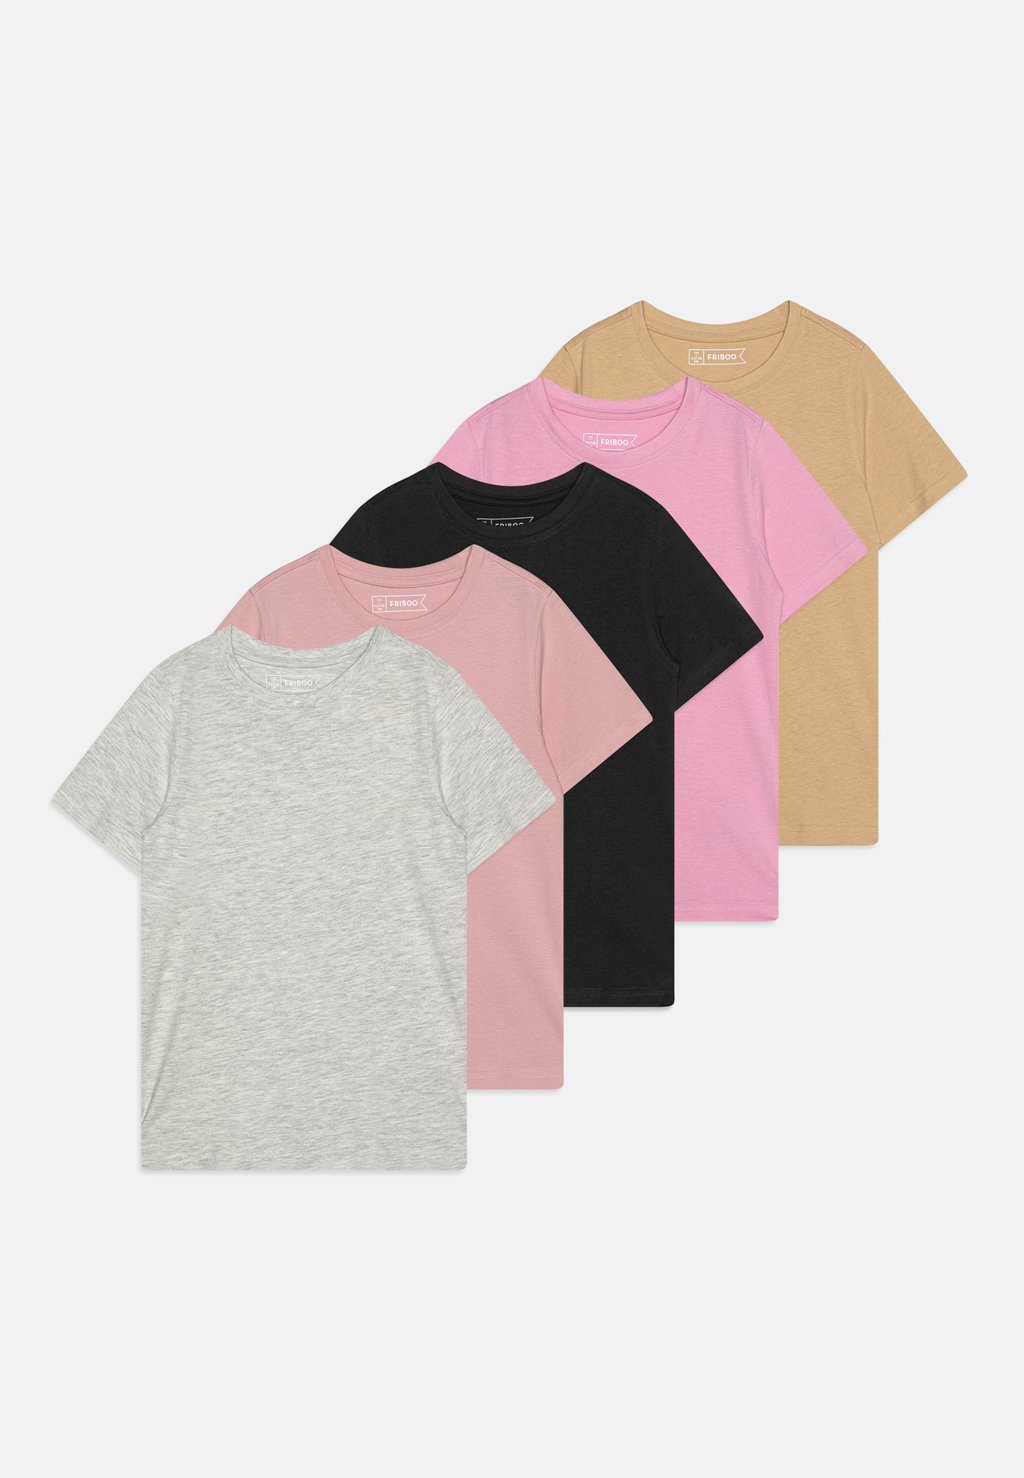 футболка с принтом Unisex 5 Pack Friboo, цвет black/light pink/mottled light grey t8247 light black 350 мл c13t824700